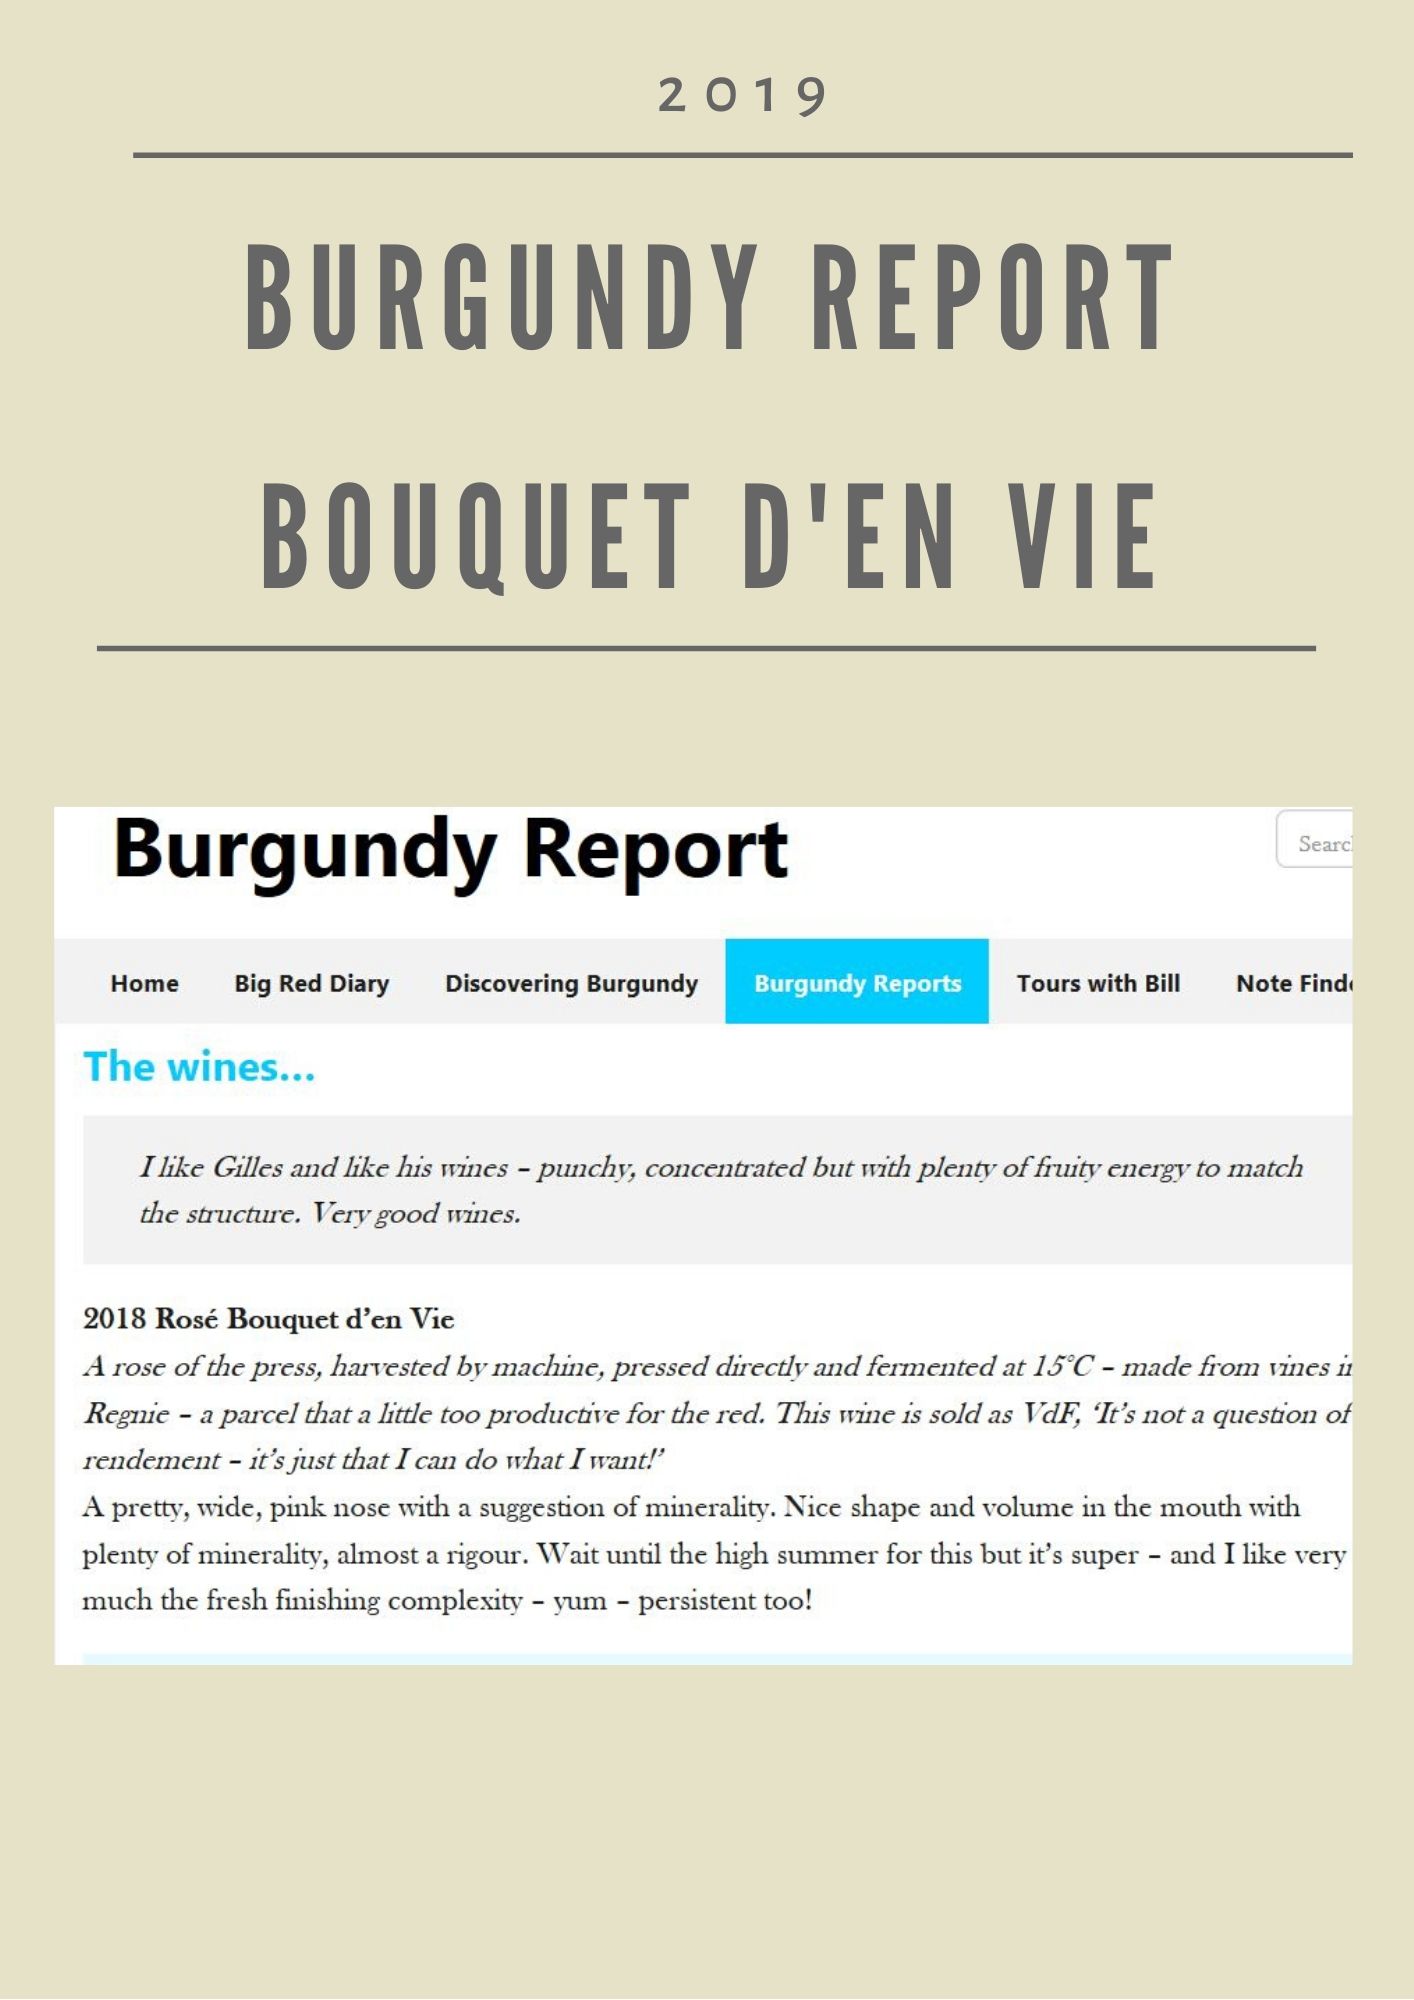 Burgundy Report - Bouquet d'En Vie